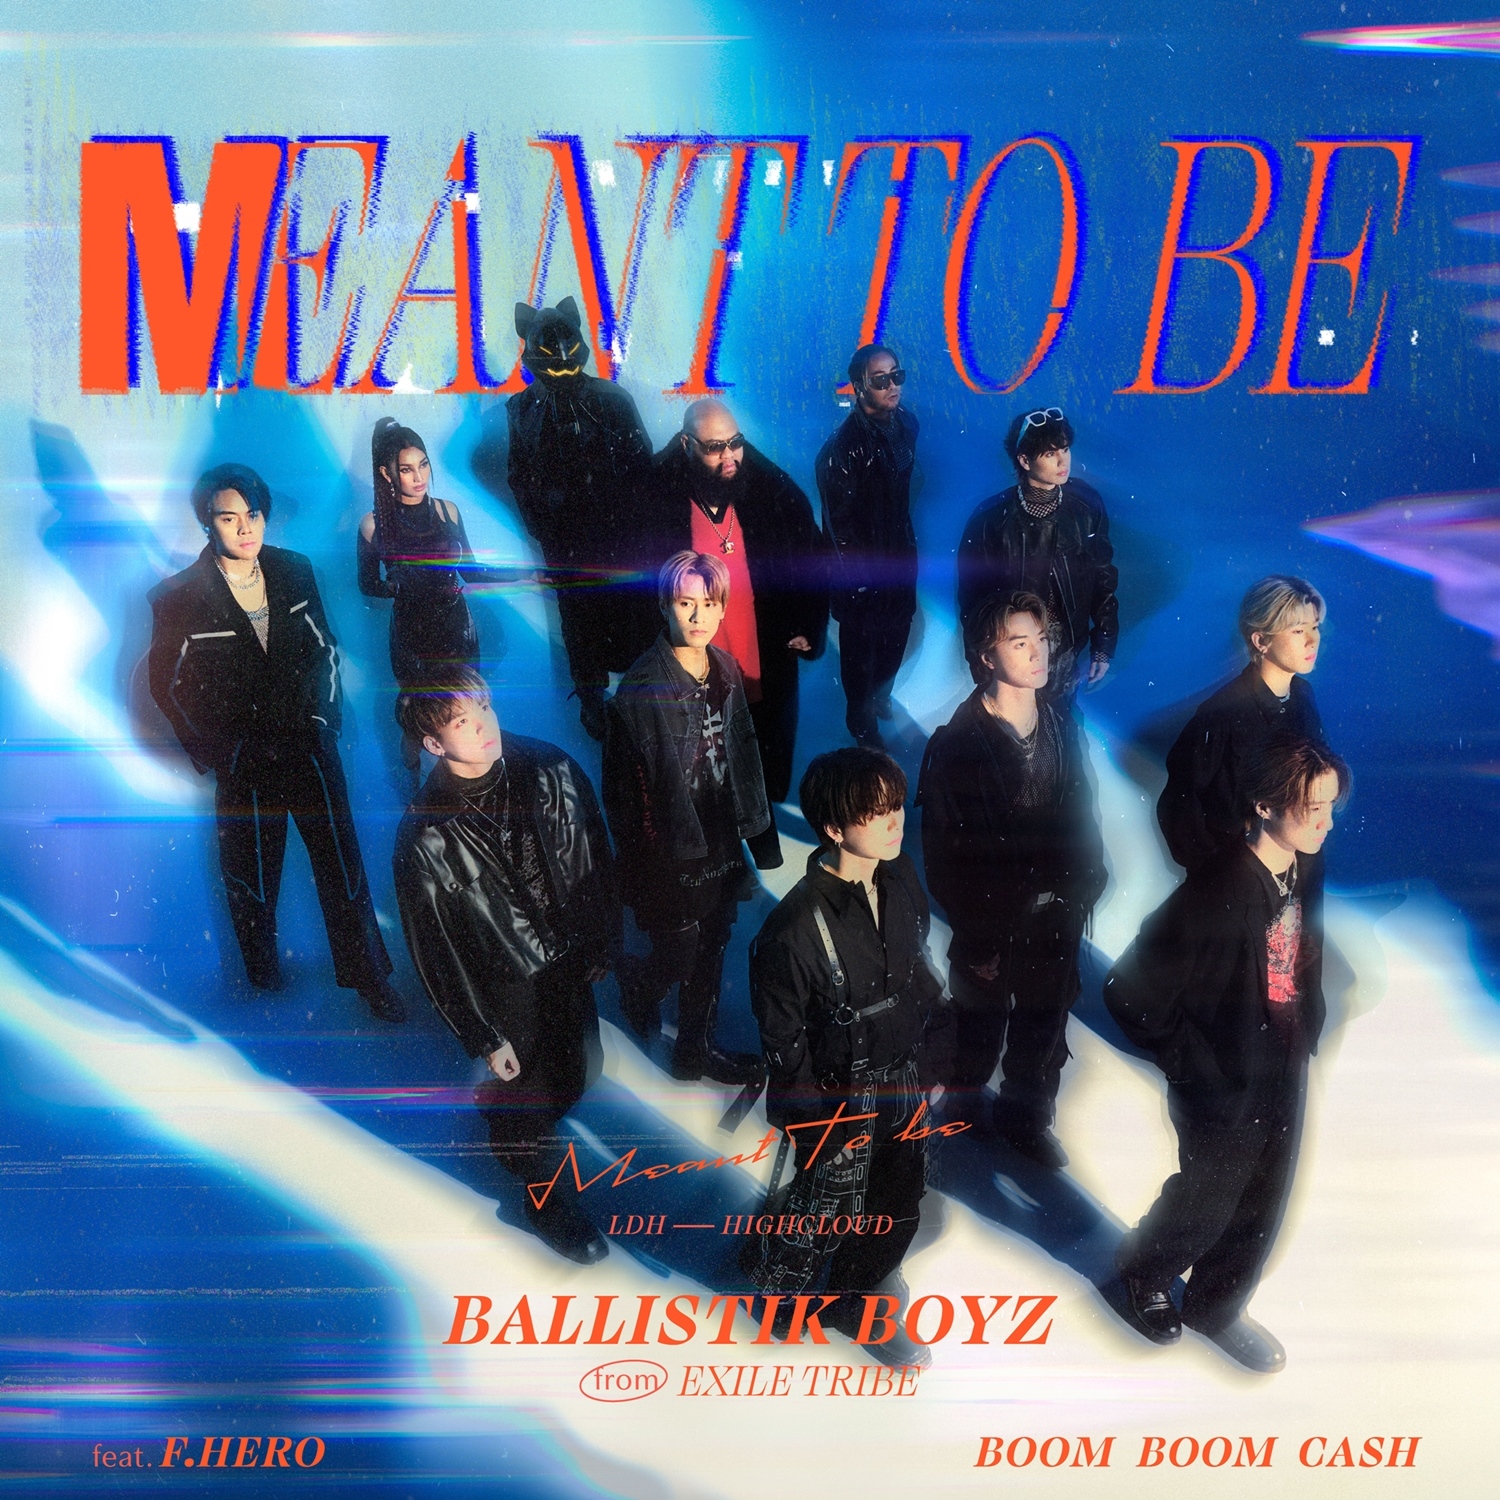 BALLISTIK BOYZの新曲「Meant to be」、F.HERO とBOOM BOOM CASH とコラボ